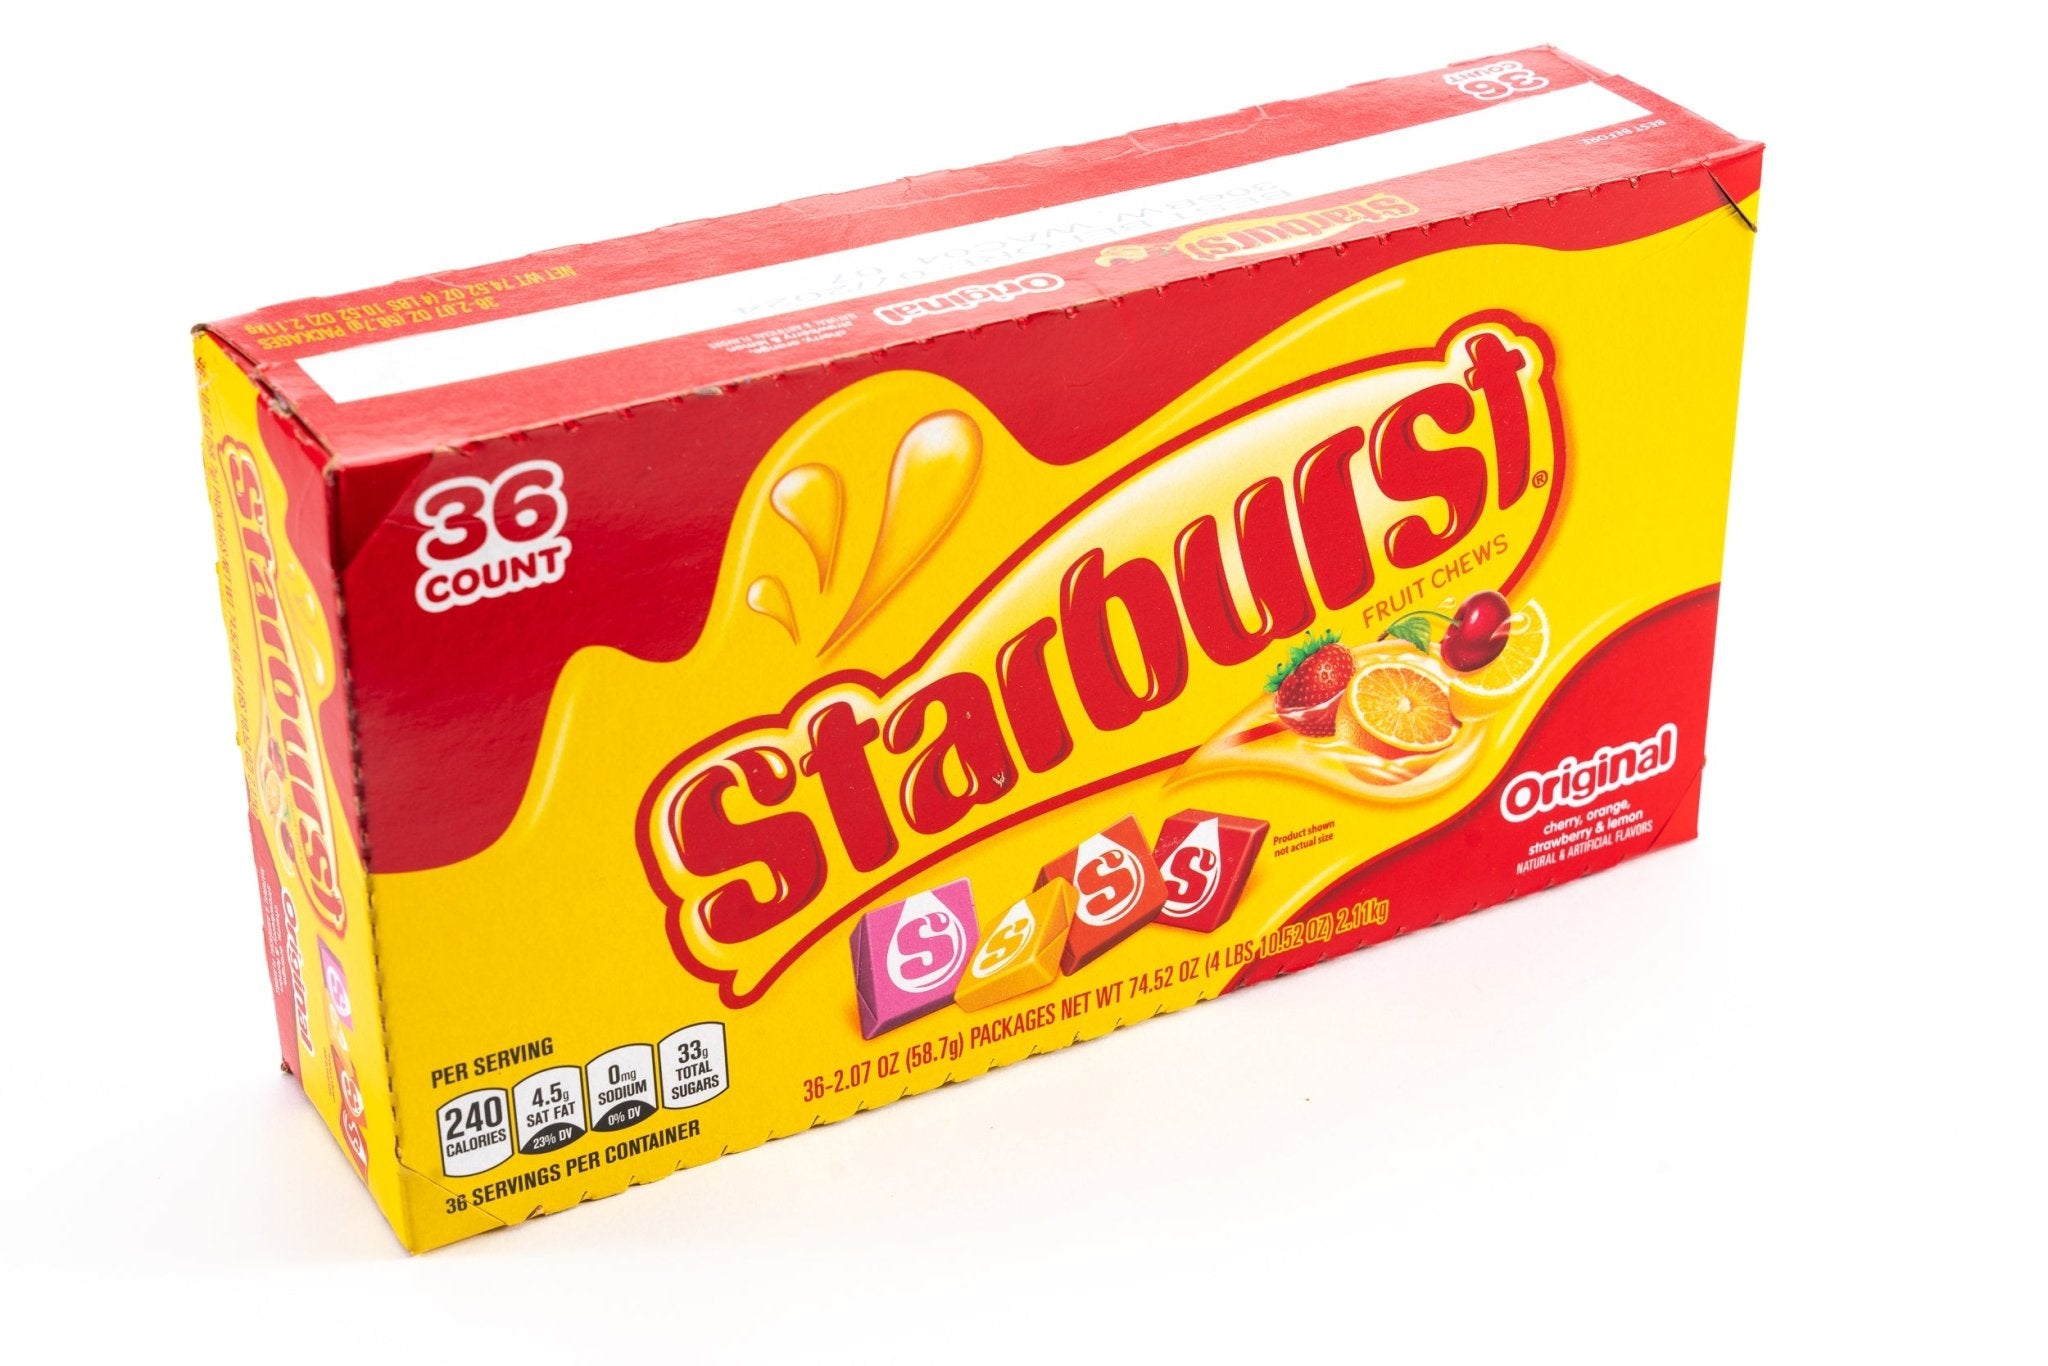 Starburst Original Fruit Chews Bulk Box (2.07 oz, 36 ct.) - Vintage Candy Co.